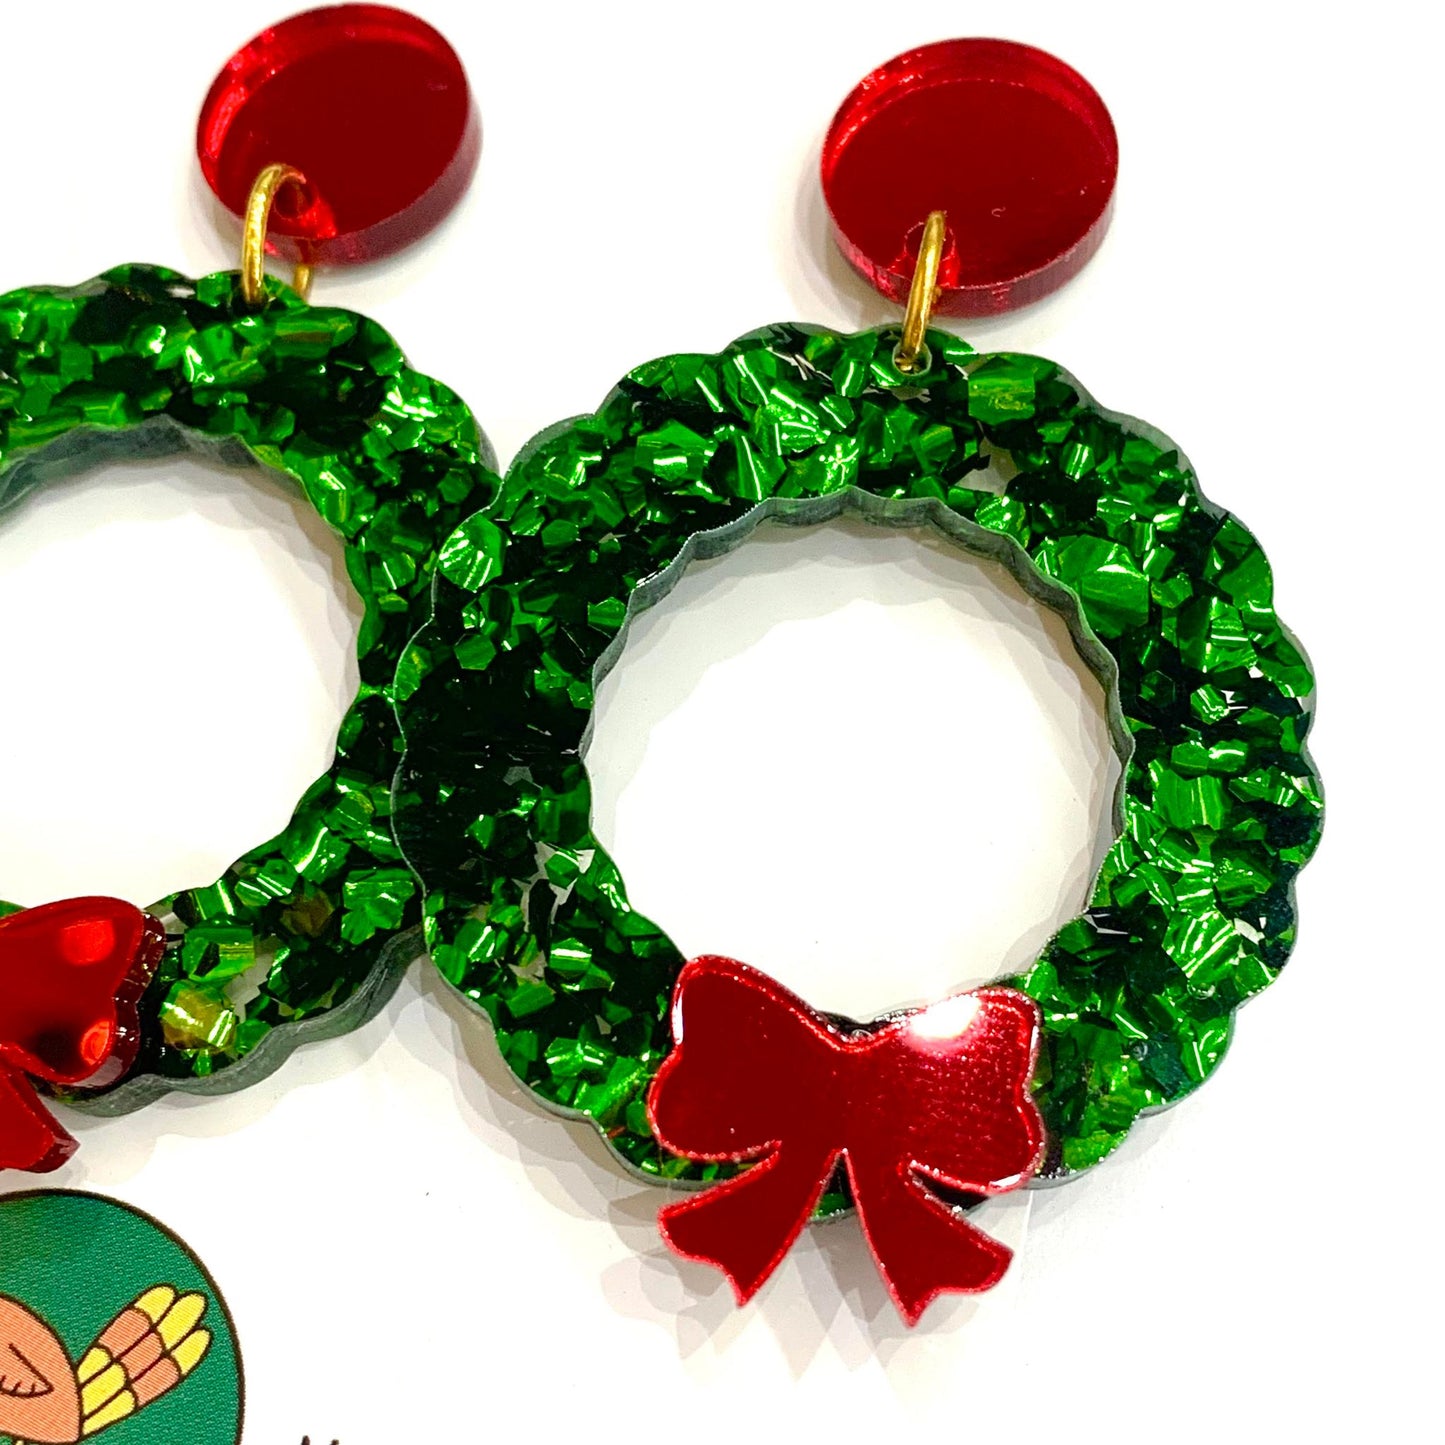 MAKIN' WHOOPEE - “Christmas Wreath” STUD DANGLES